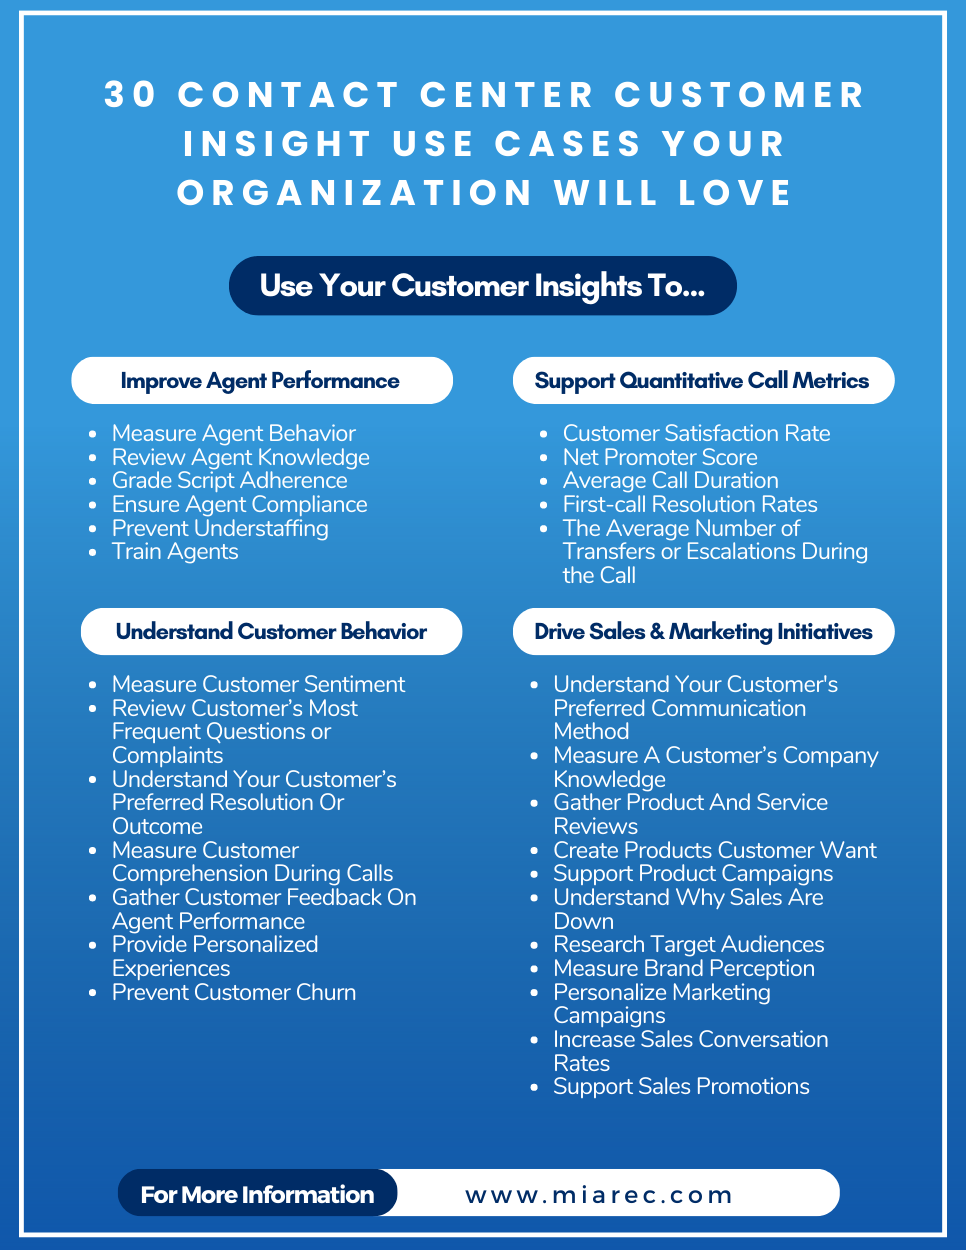 30 Contact Center Customer Insights